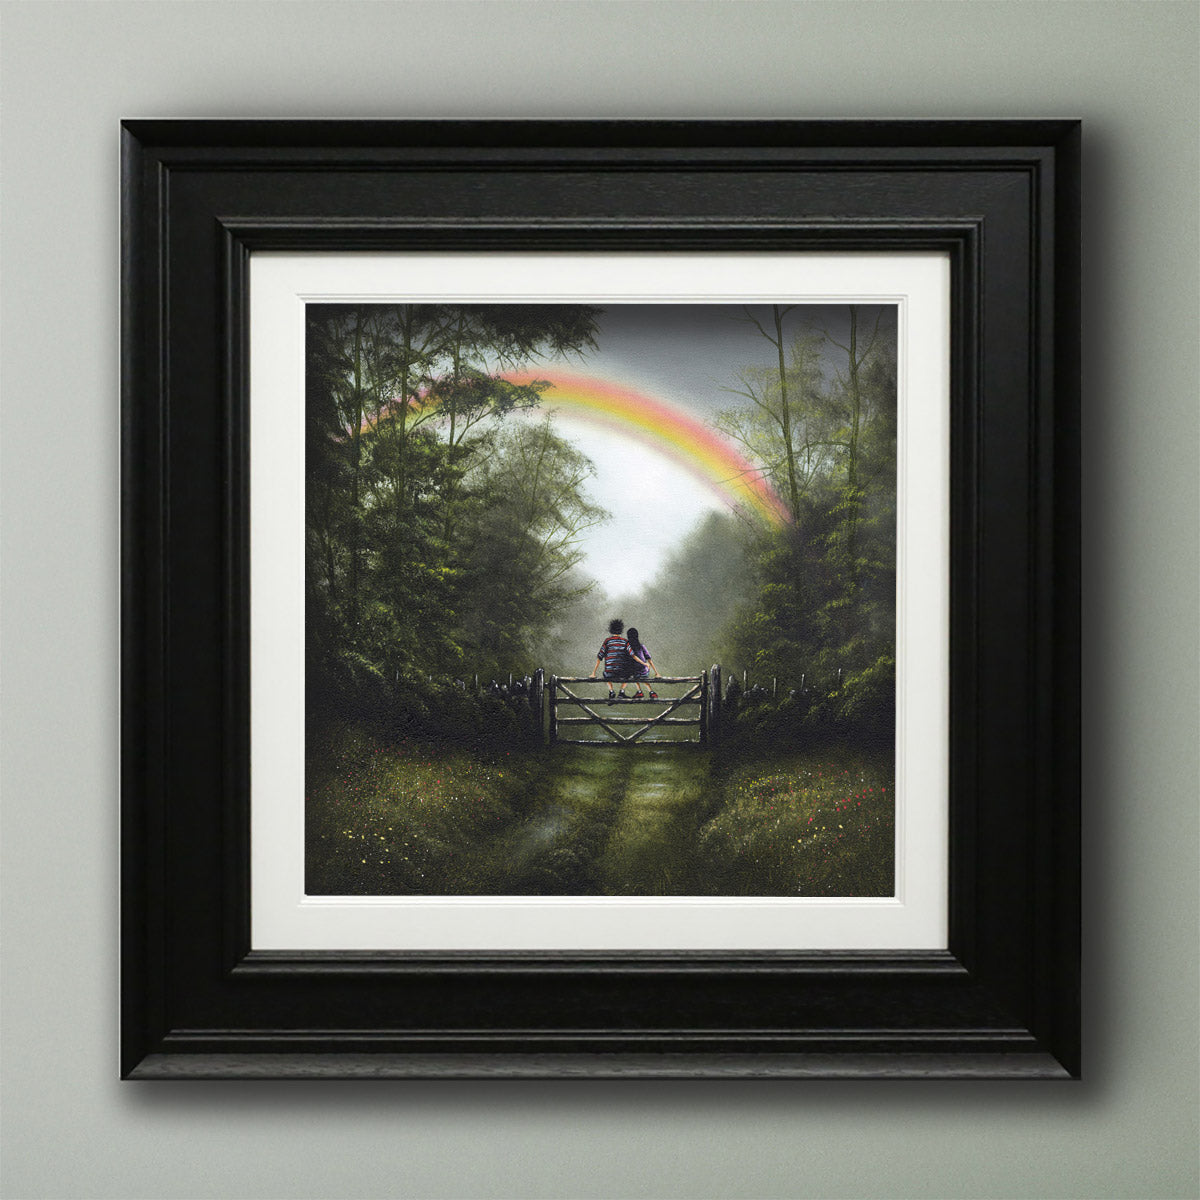 Danny Abrahams - 'A Moment Of Wonder' - Framed Limited Edition Art